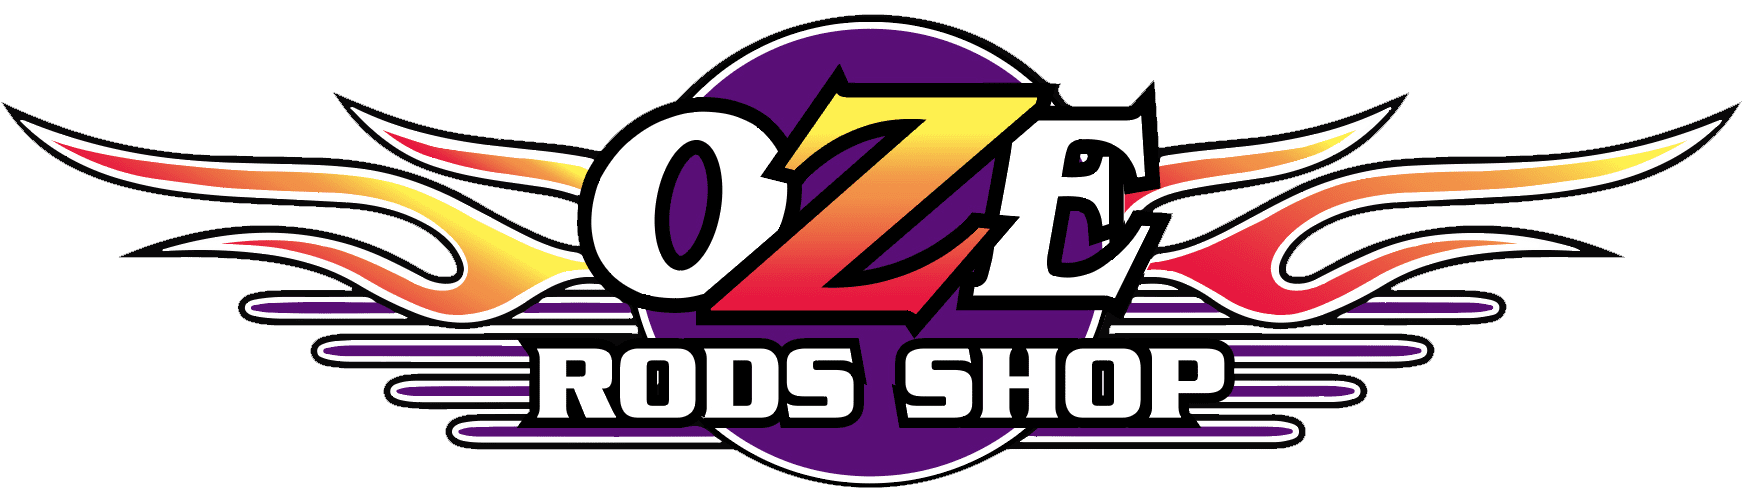 oze rods shop logo